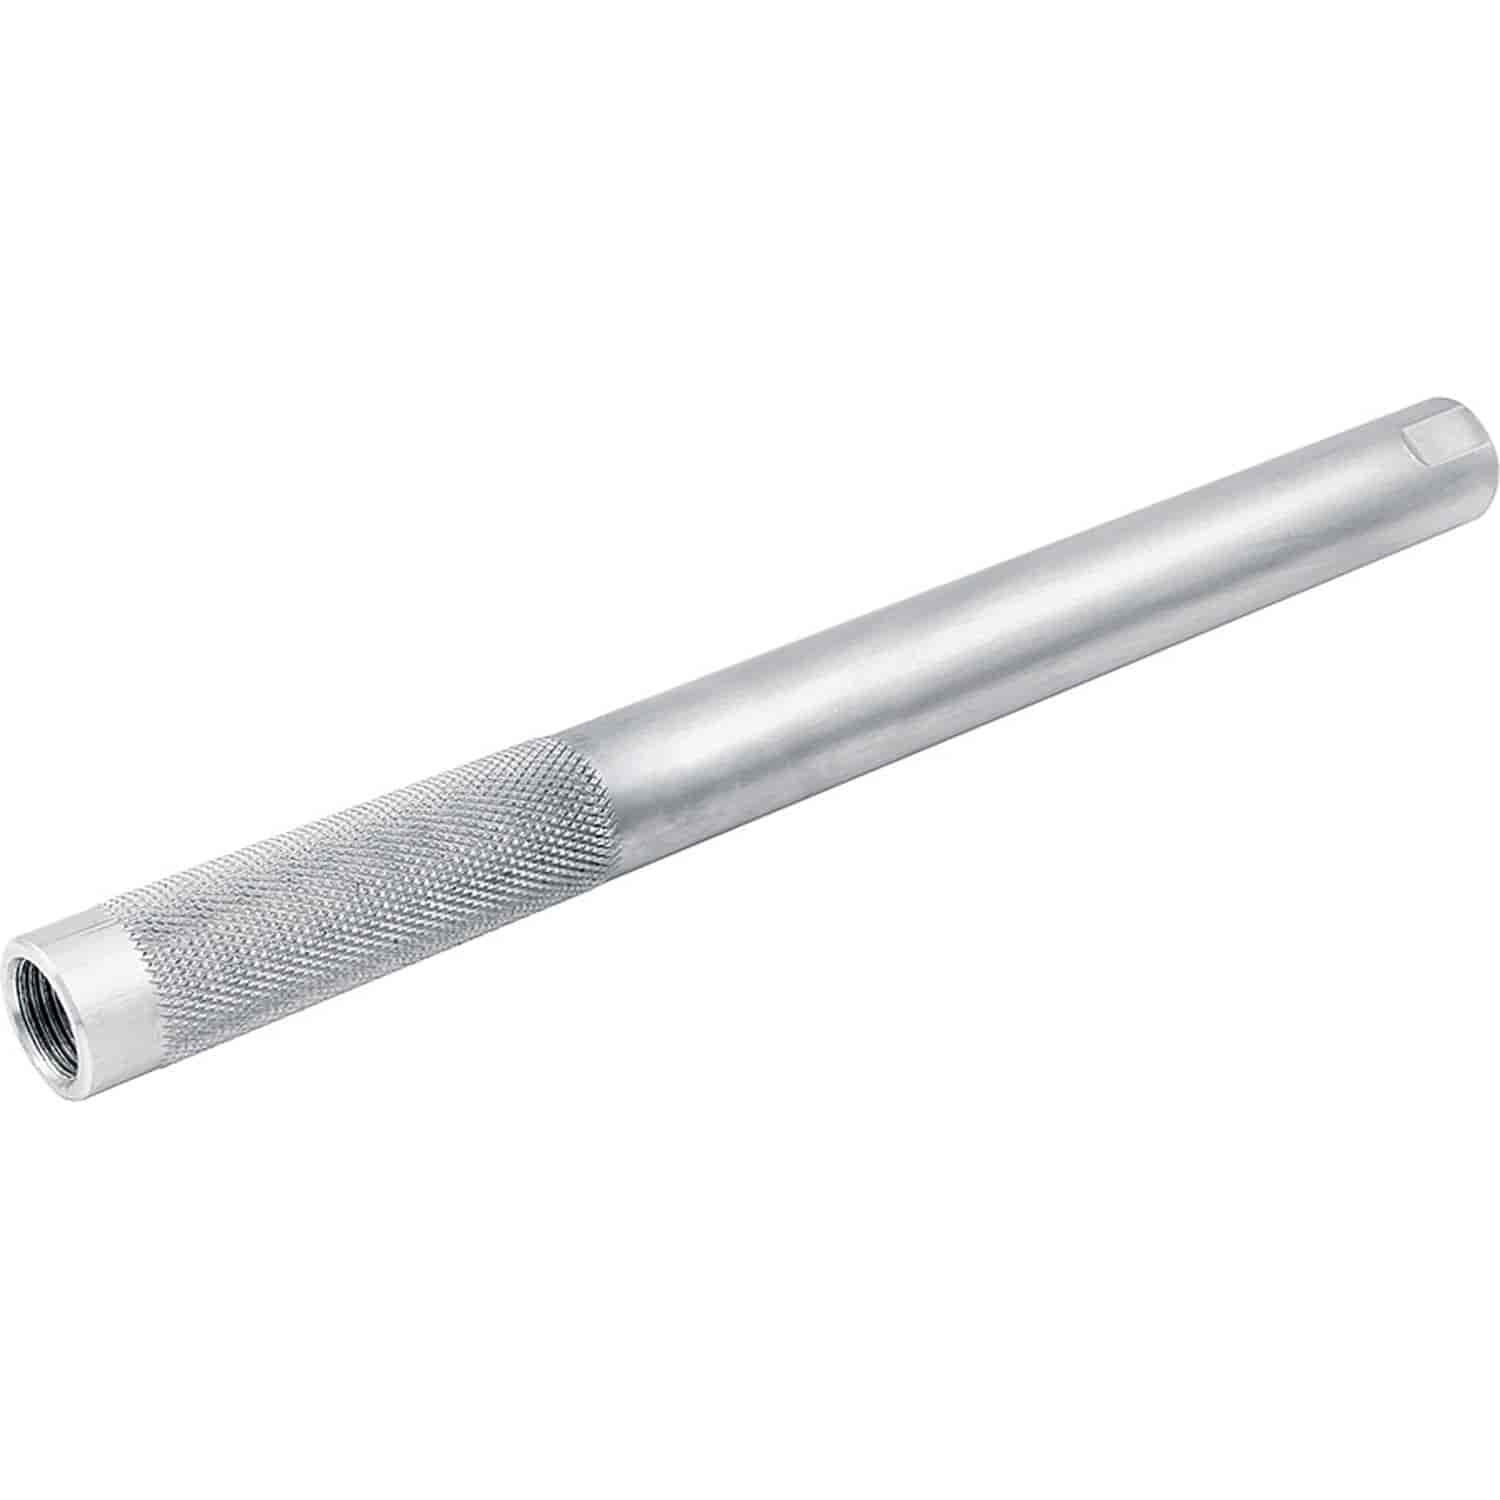 Swedged Aluminum Tie Rod Tube Length: 17"